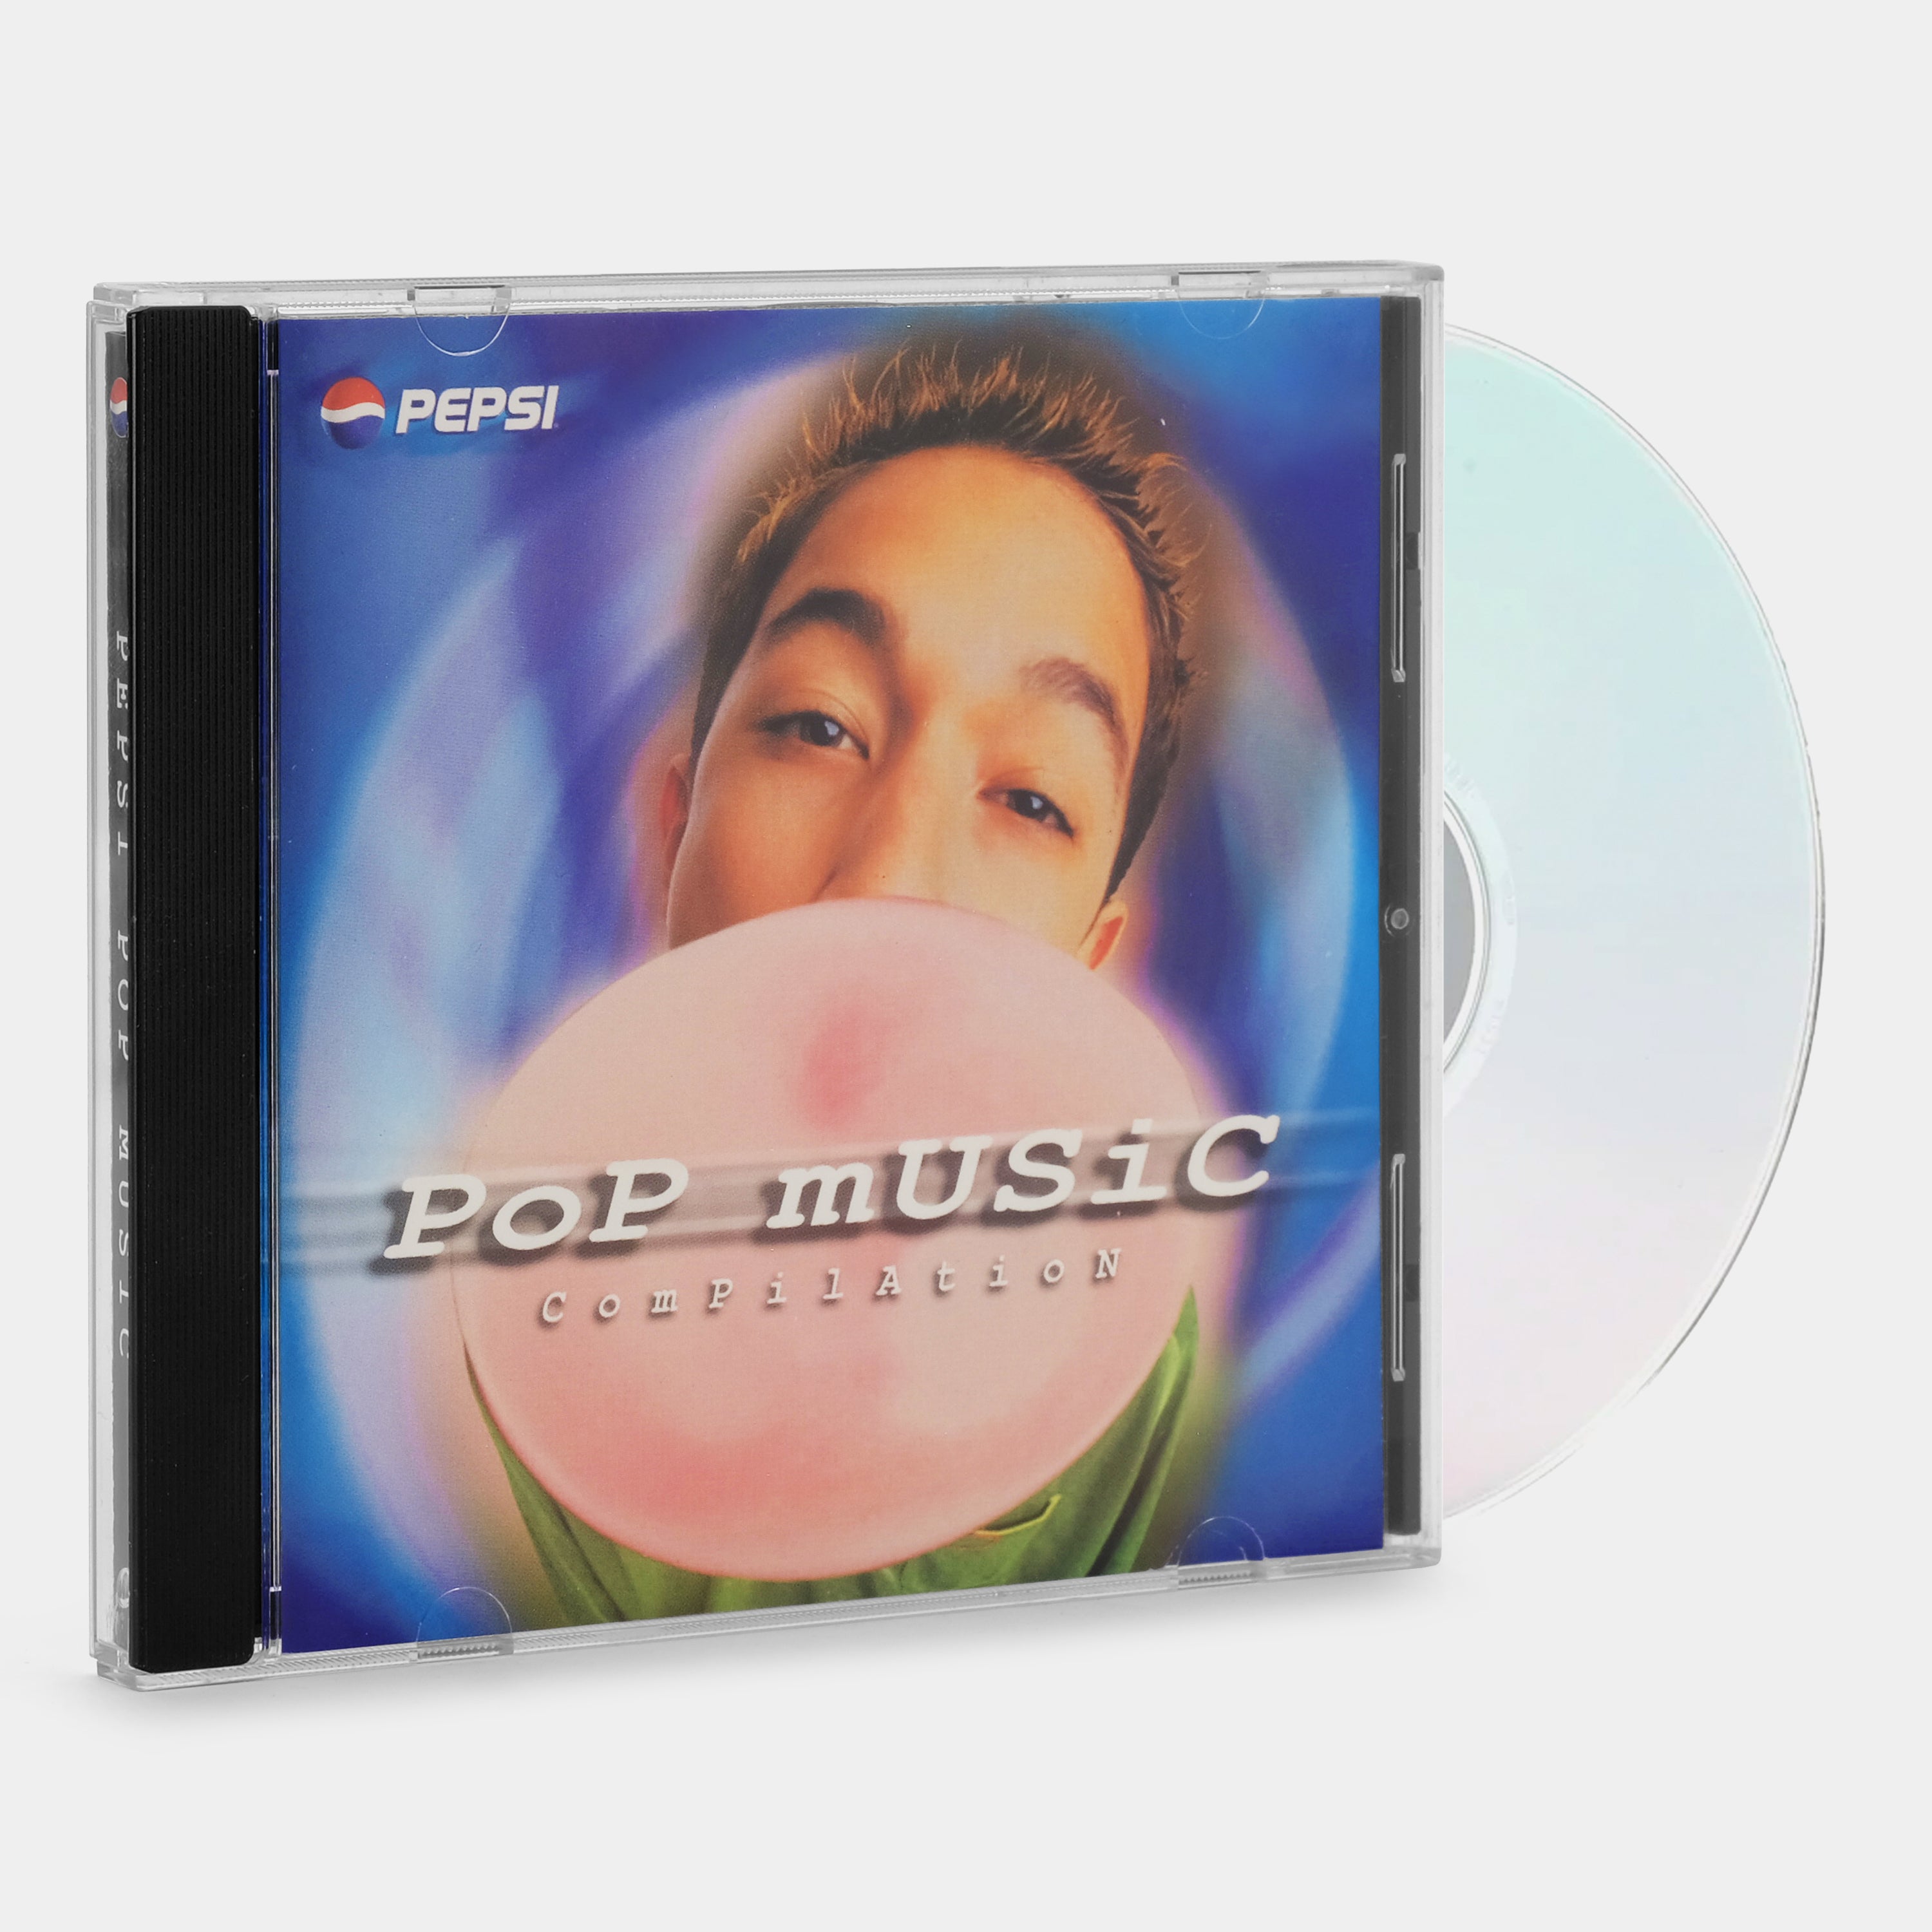 Pepsi Pop Music Compilation CD